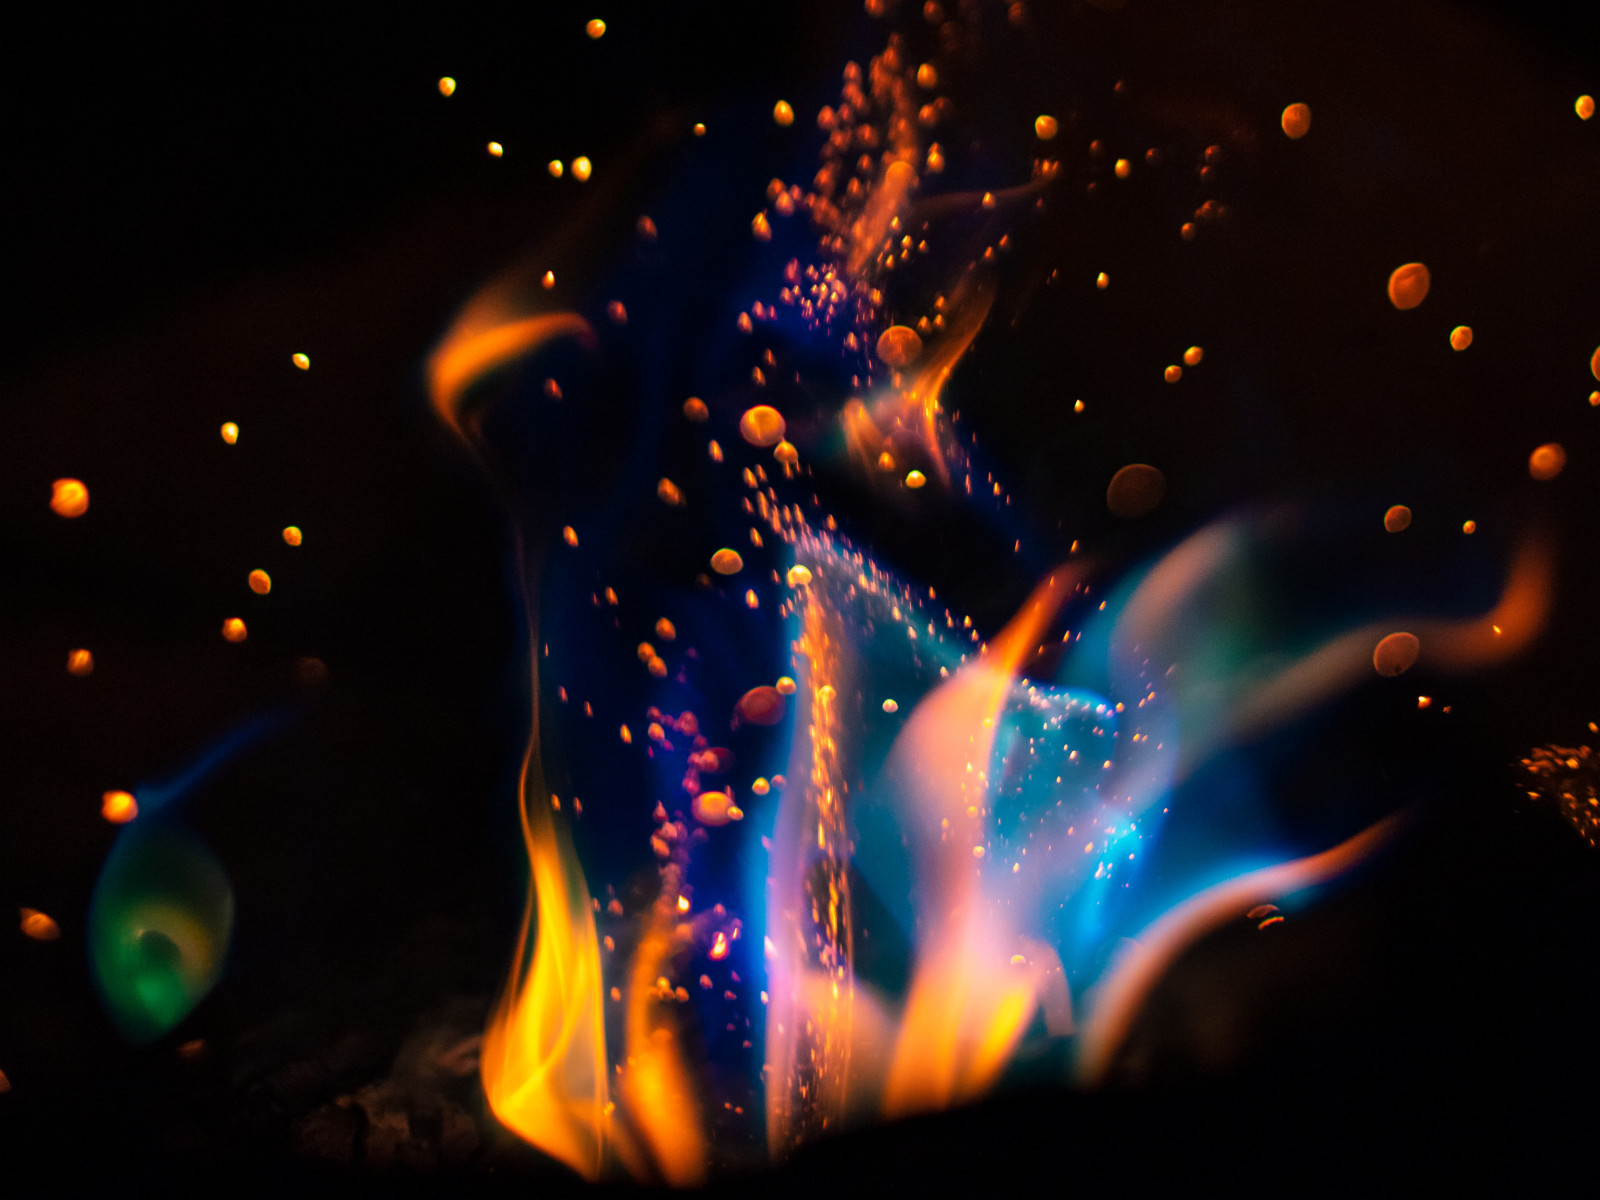 Hot flames in darkness wallpaper 1600x1200